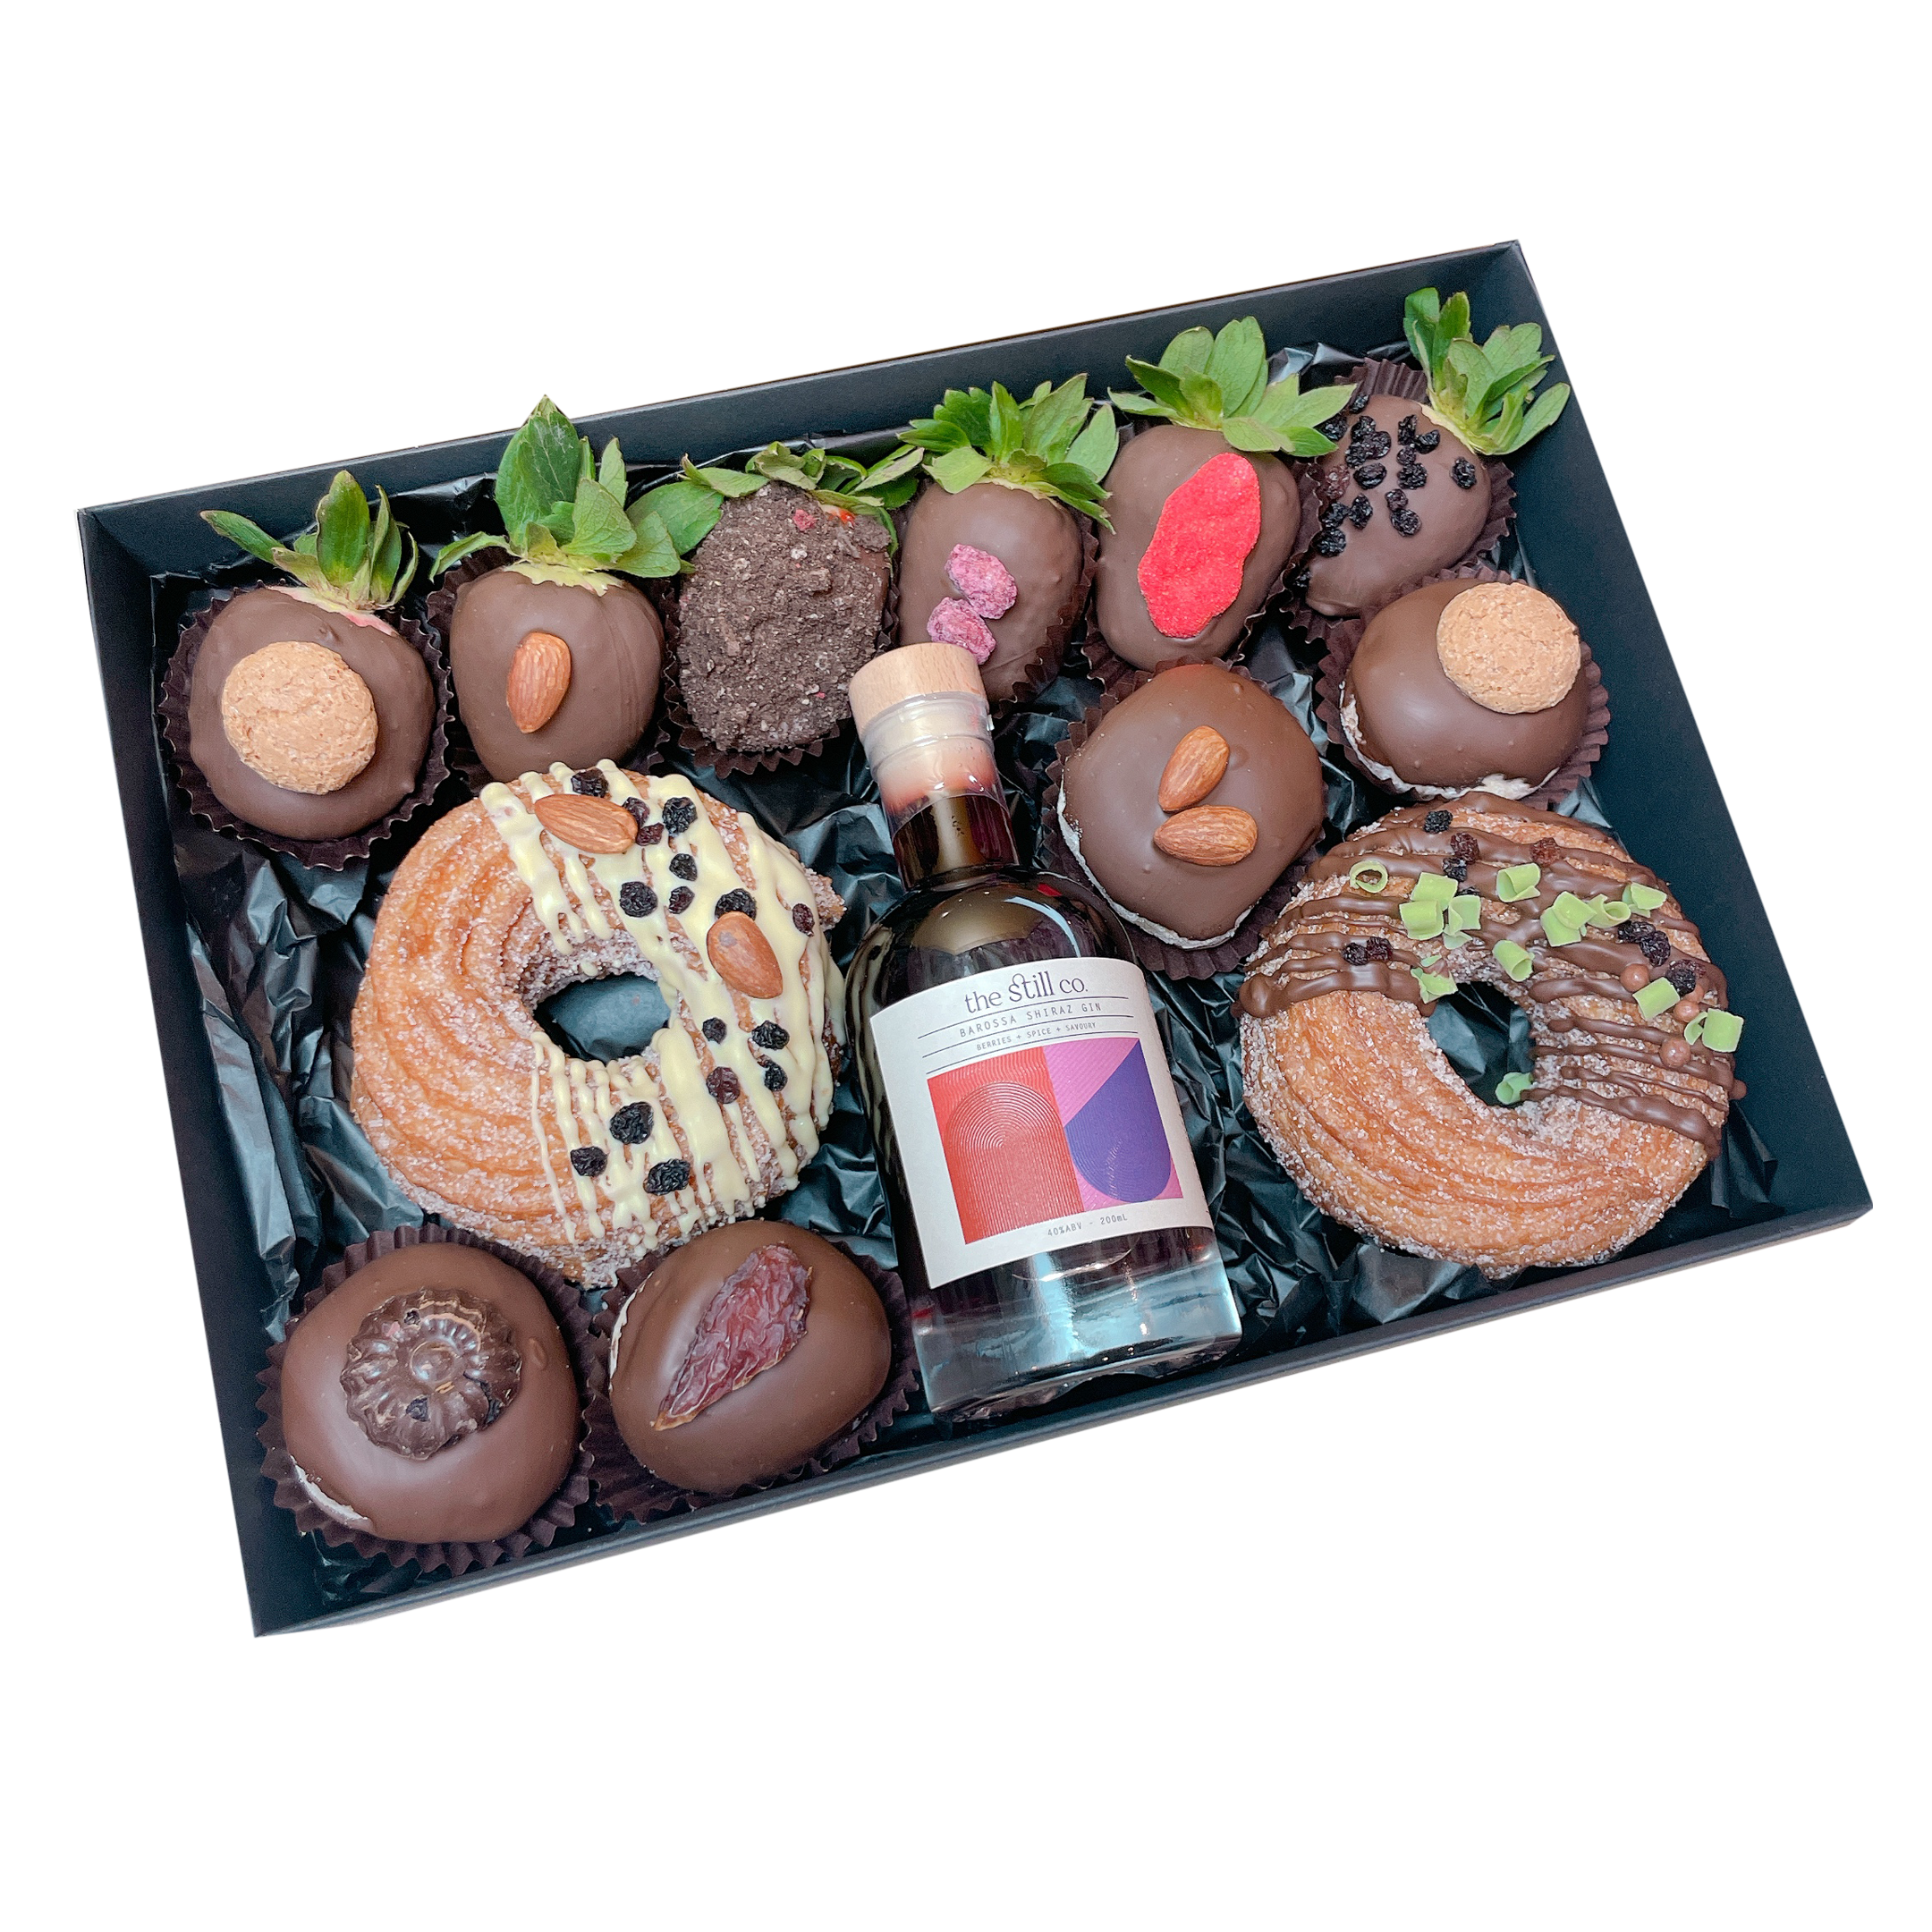 BAROSSA SHIRAZ GIN Donuts Zeppoles and Chocolate Strawberries Dessert Box